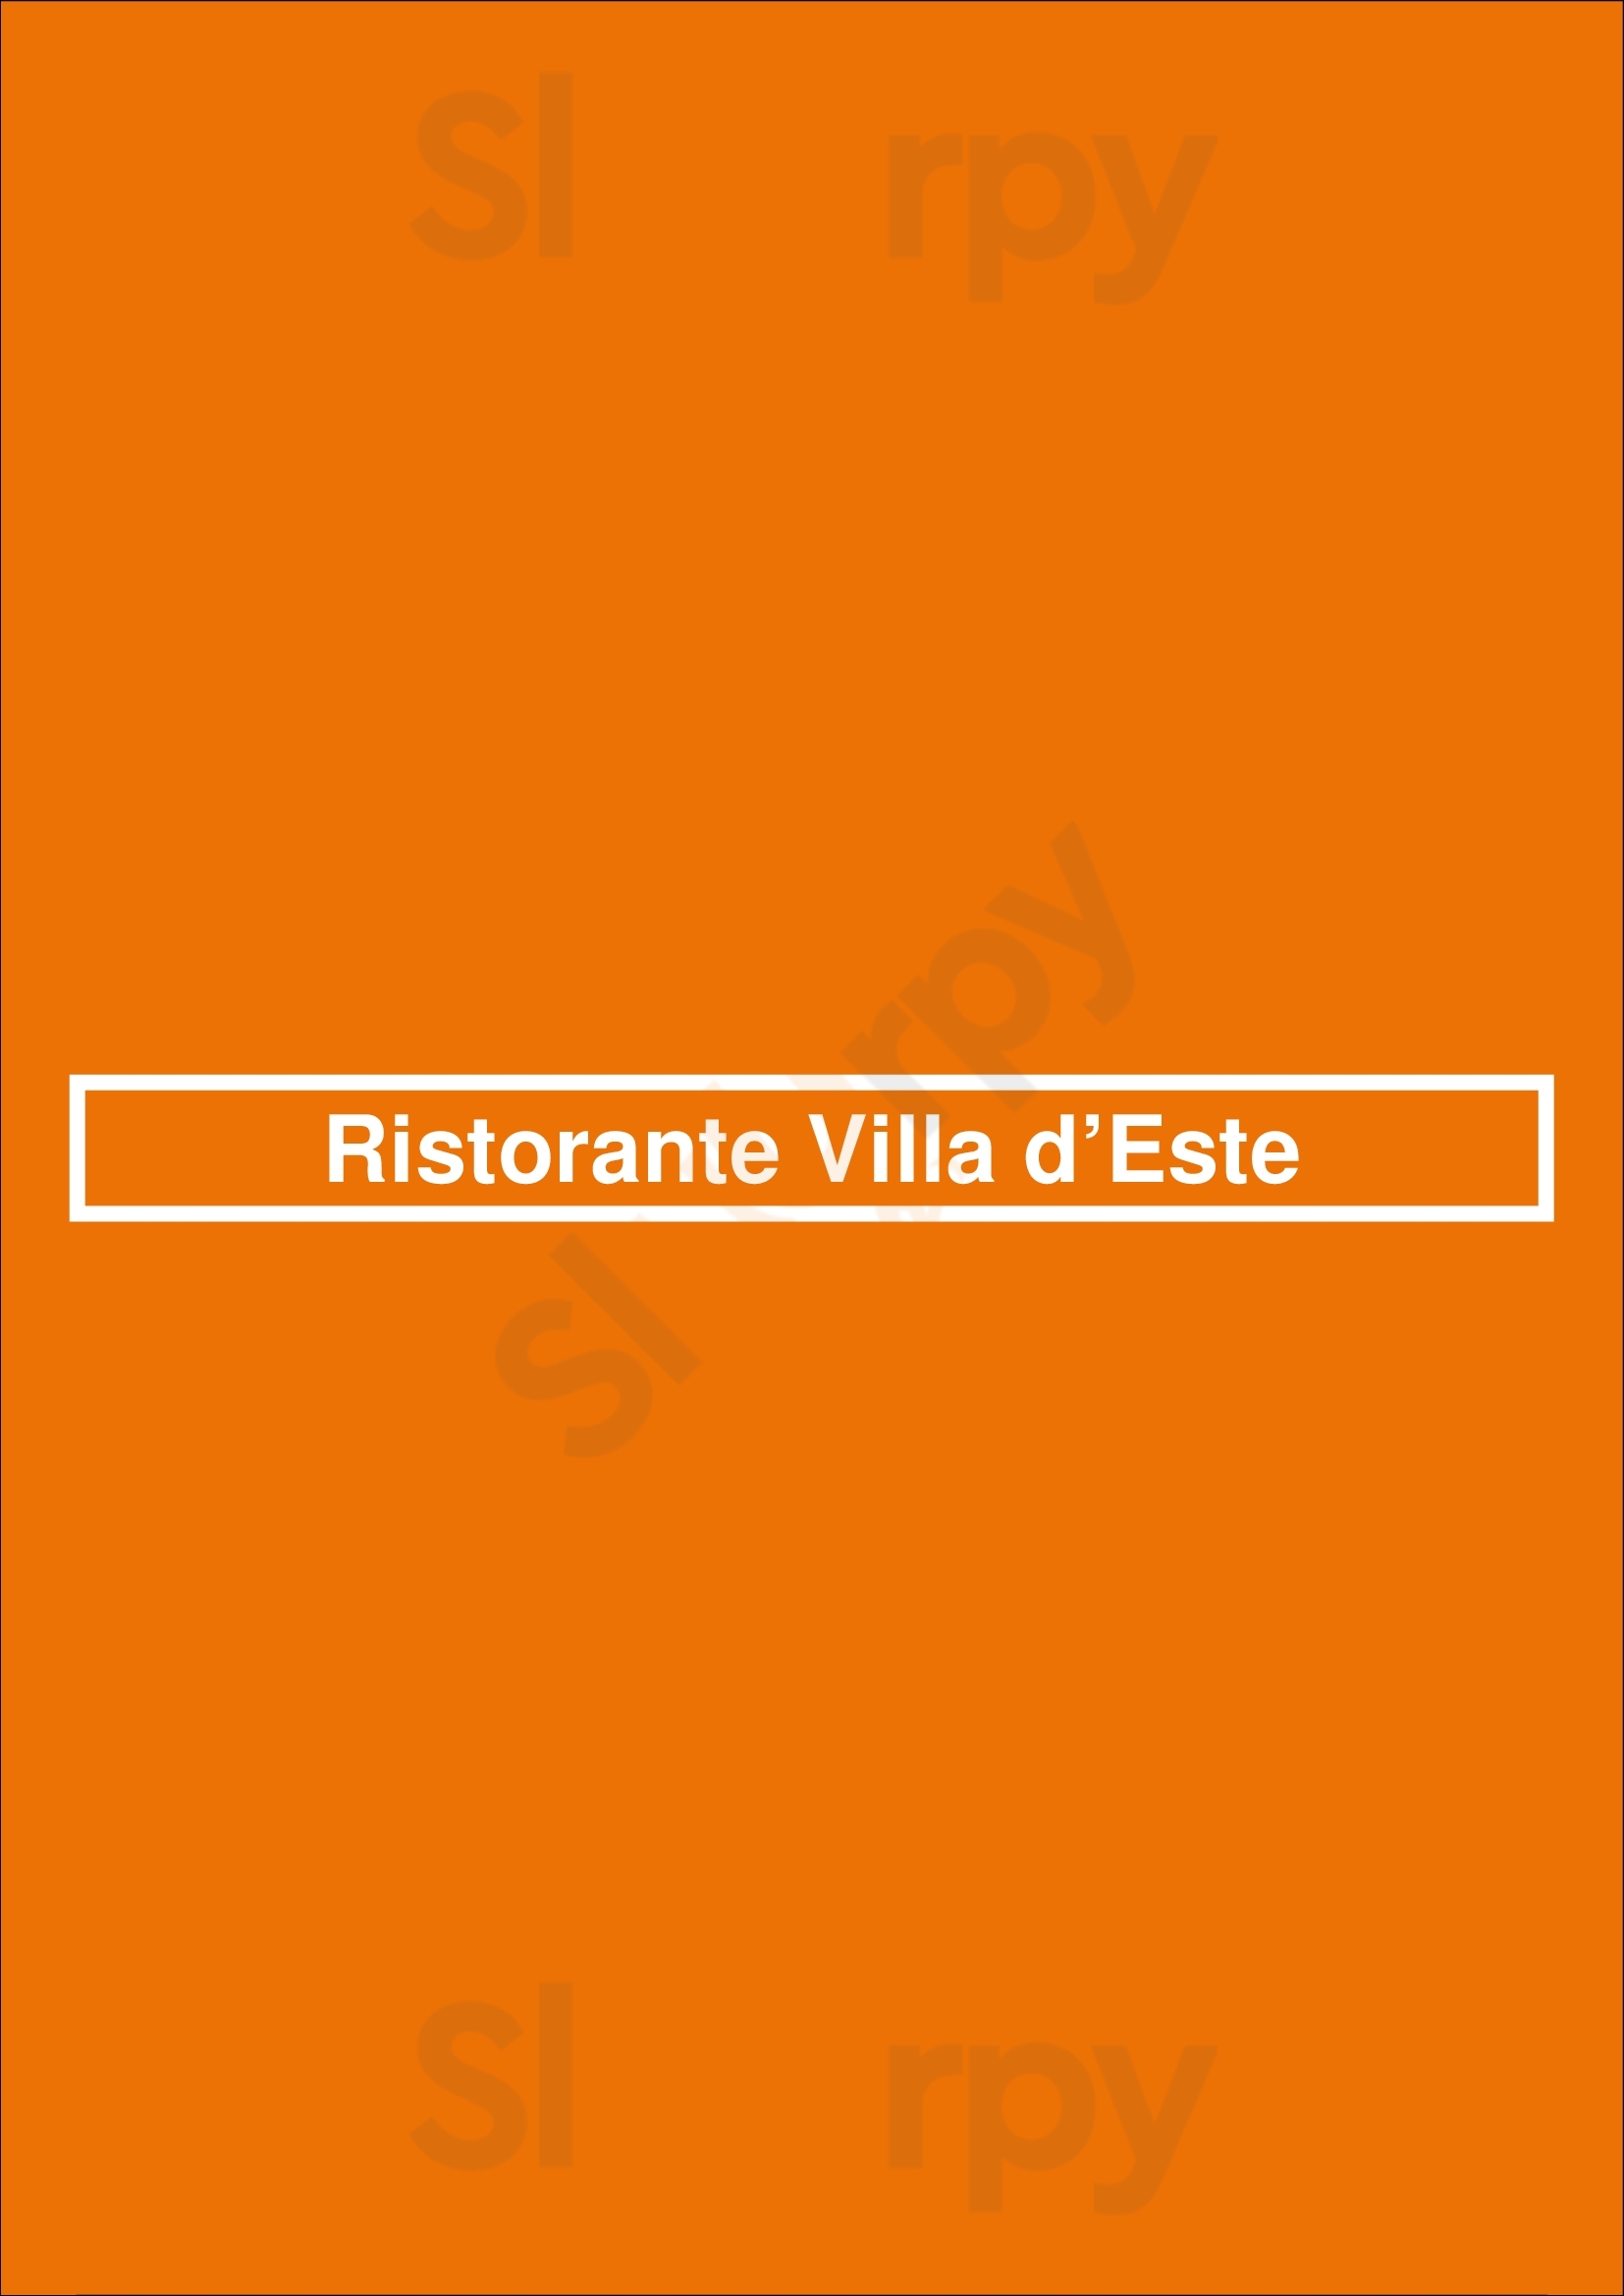 Ristorante Villa D’este Vaudreuil-Dorion Menu - 1